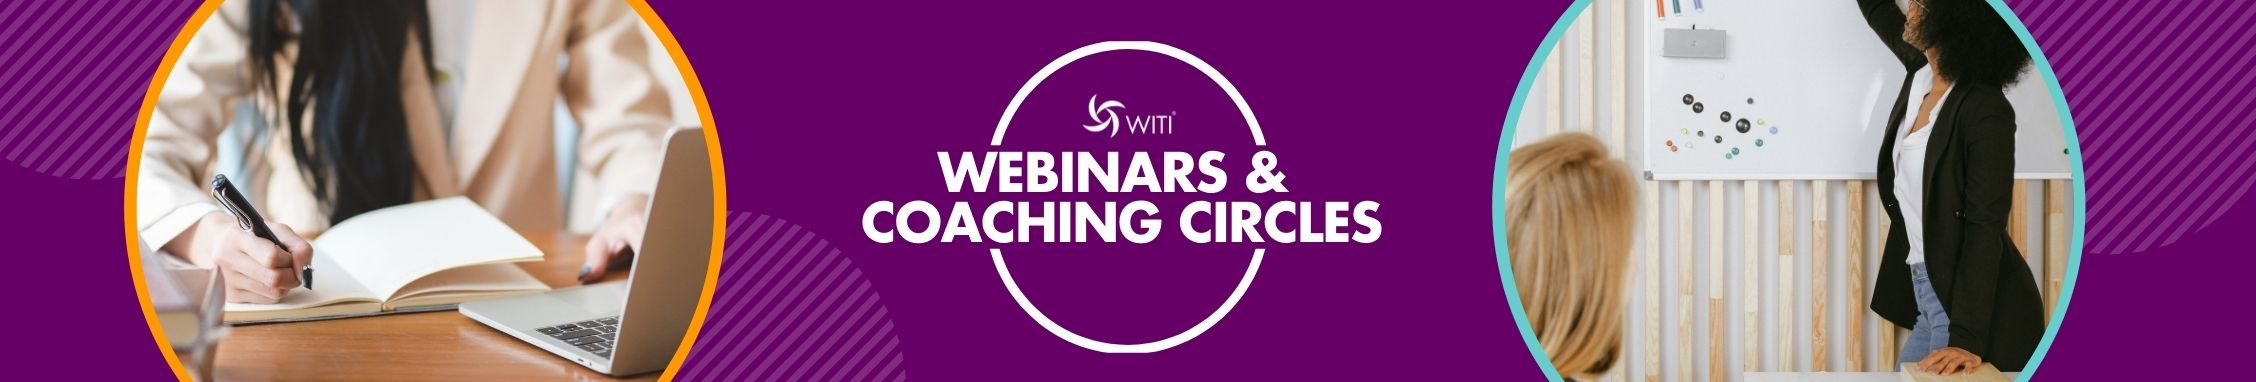 Webinars and Coaching Circles